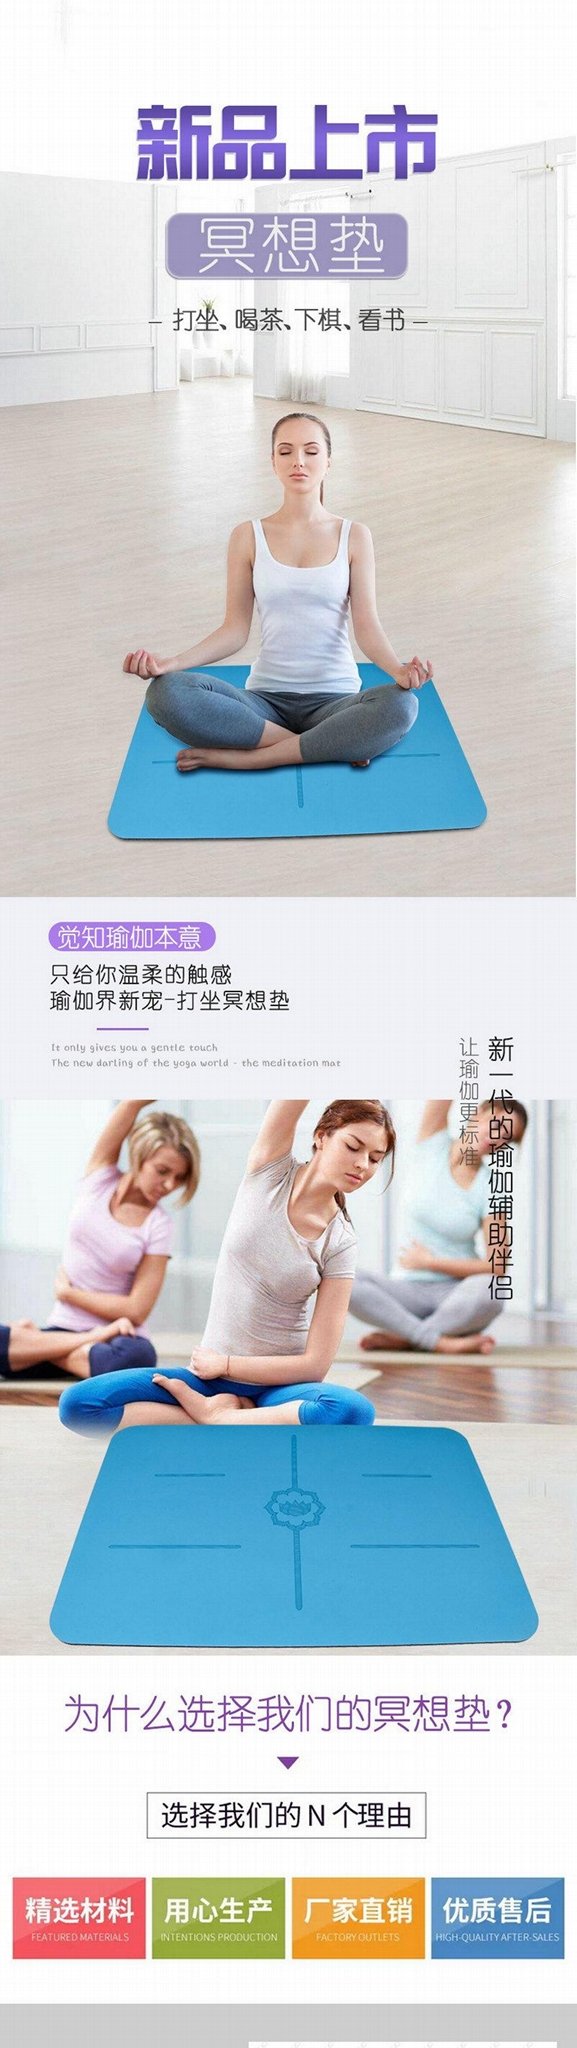 60*40*0.4cm PU Rubber Handstand Mat Yoga Position  5